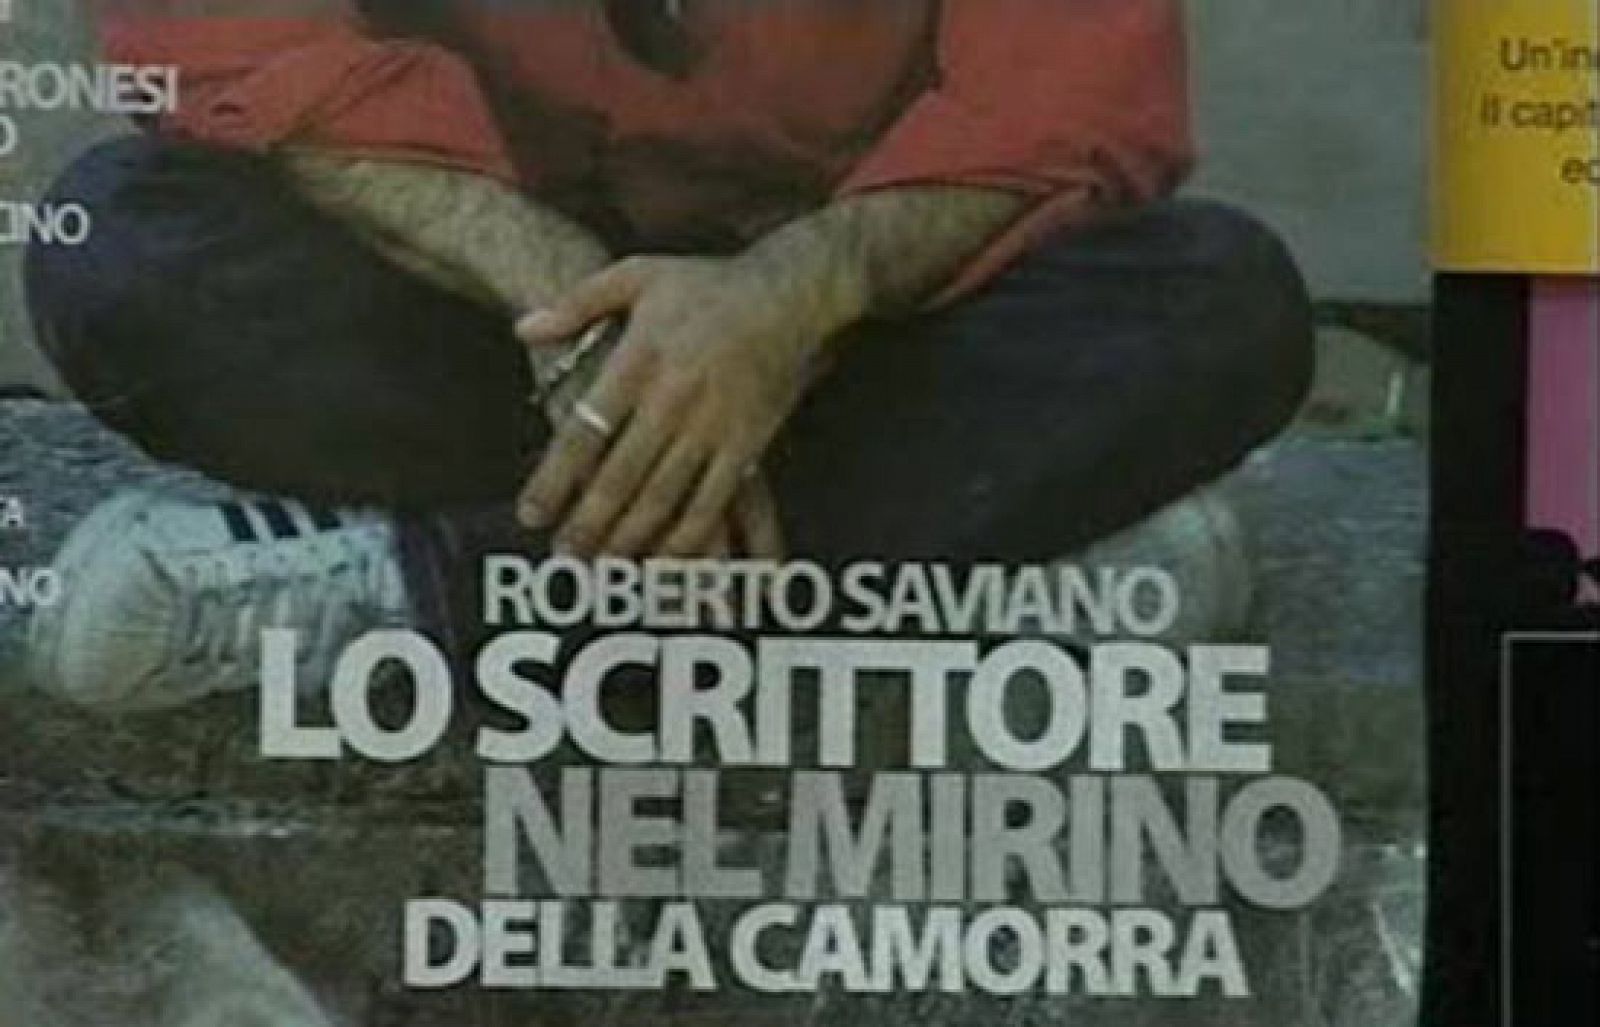 La Camorra sentencia a muerte a Roberto Saviano